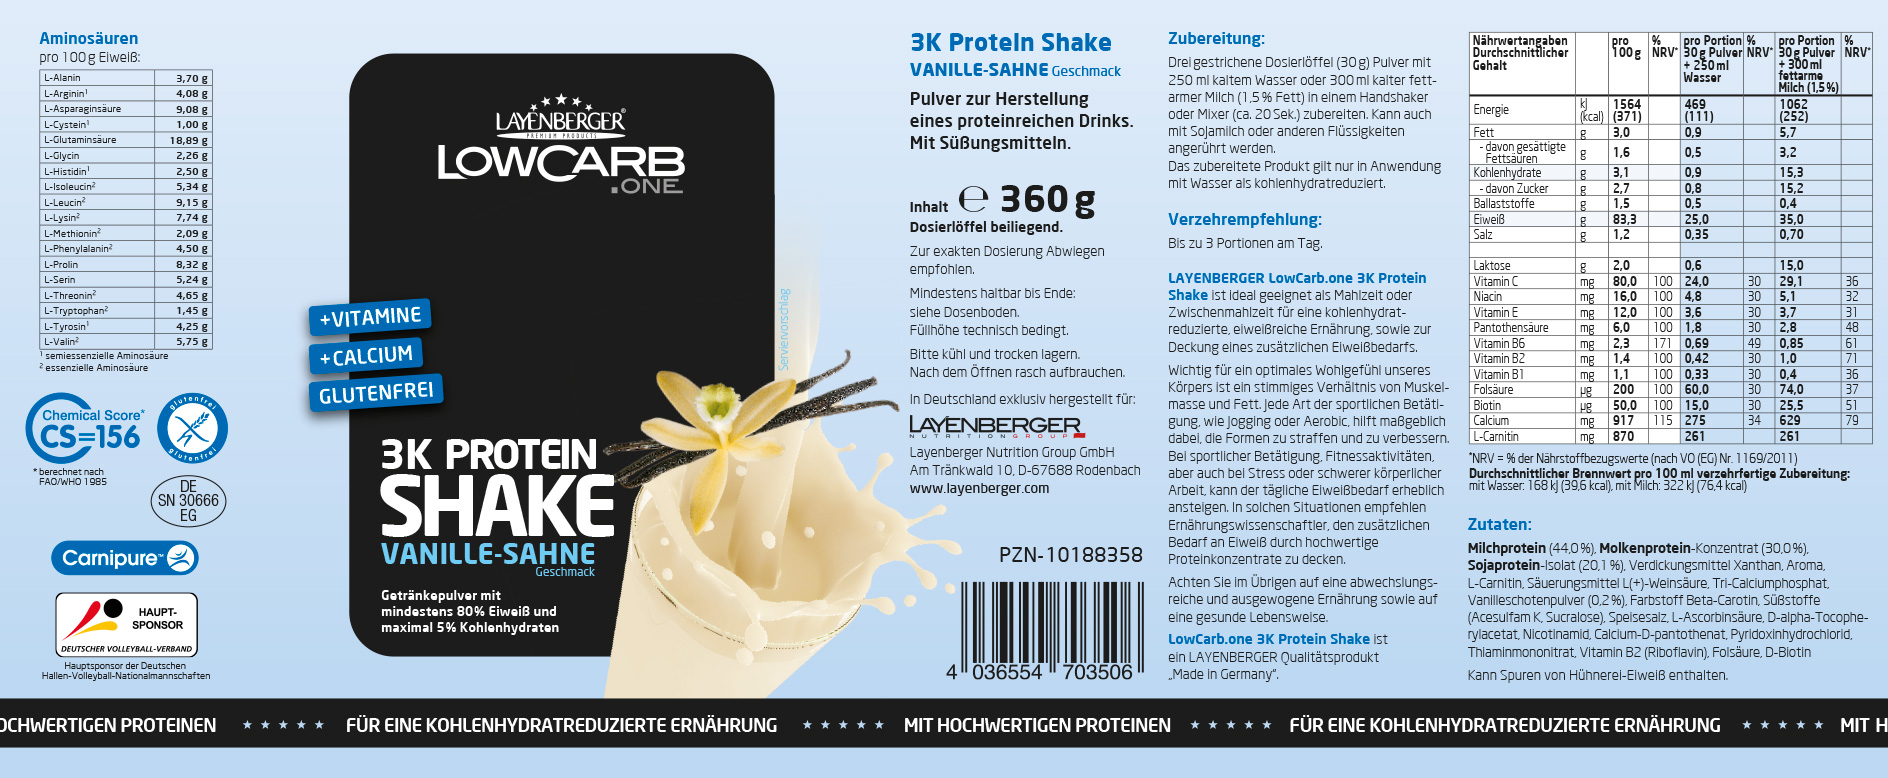 LAYENBERGER LowCarb.one 3K Protein Shake Vanille Sahne 360g